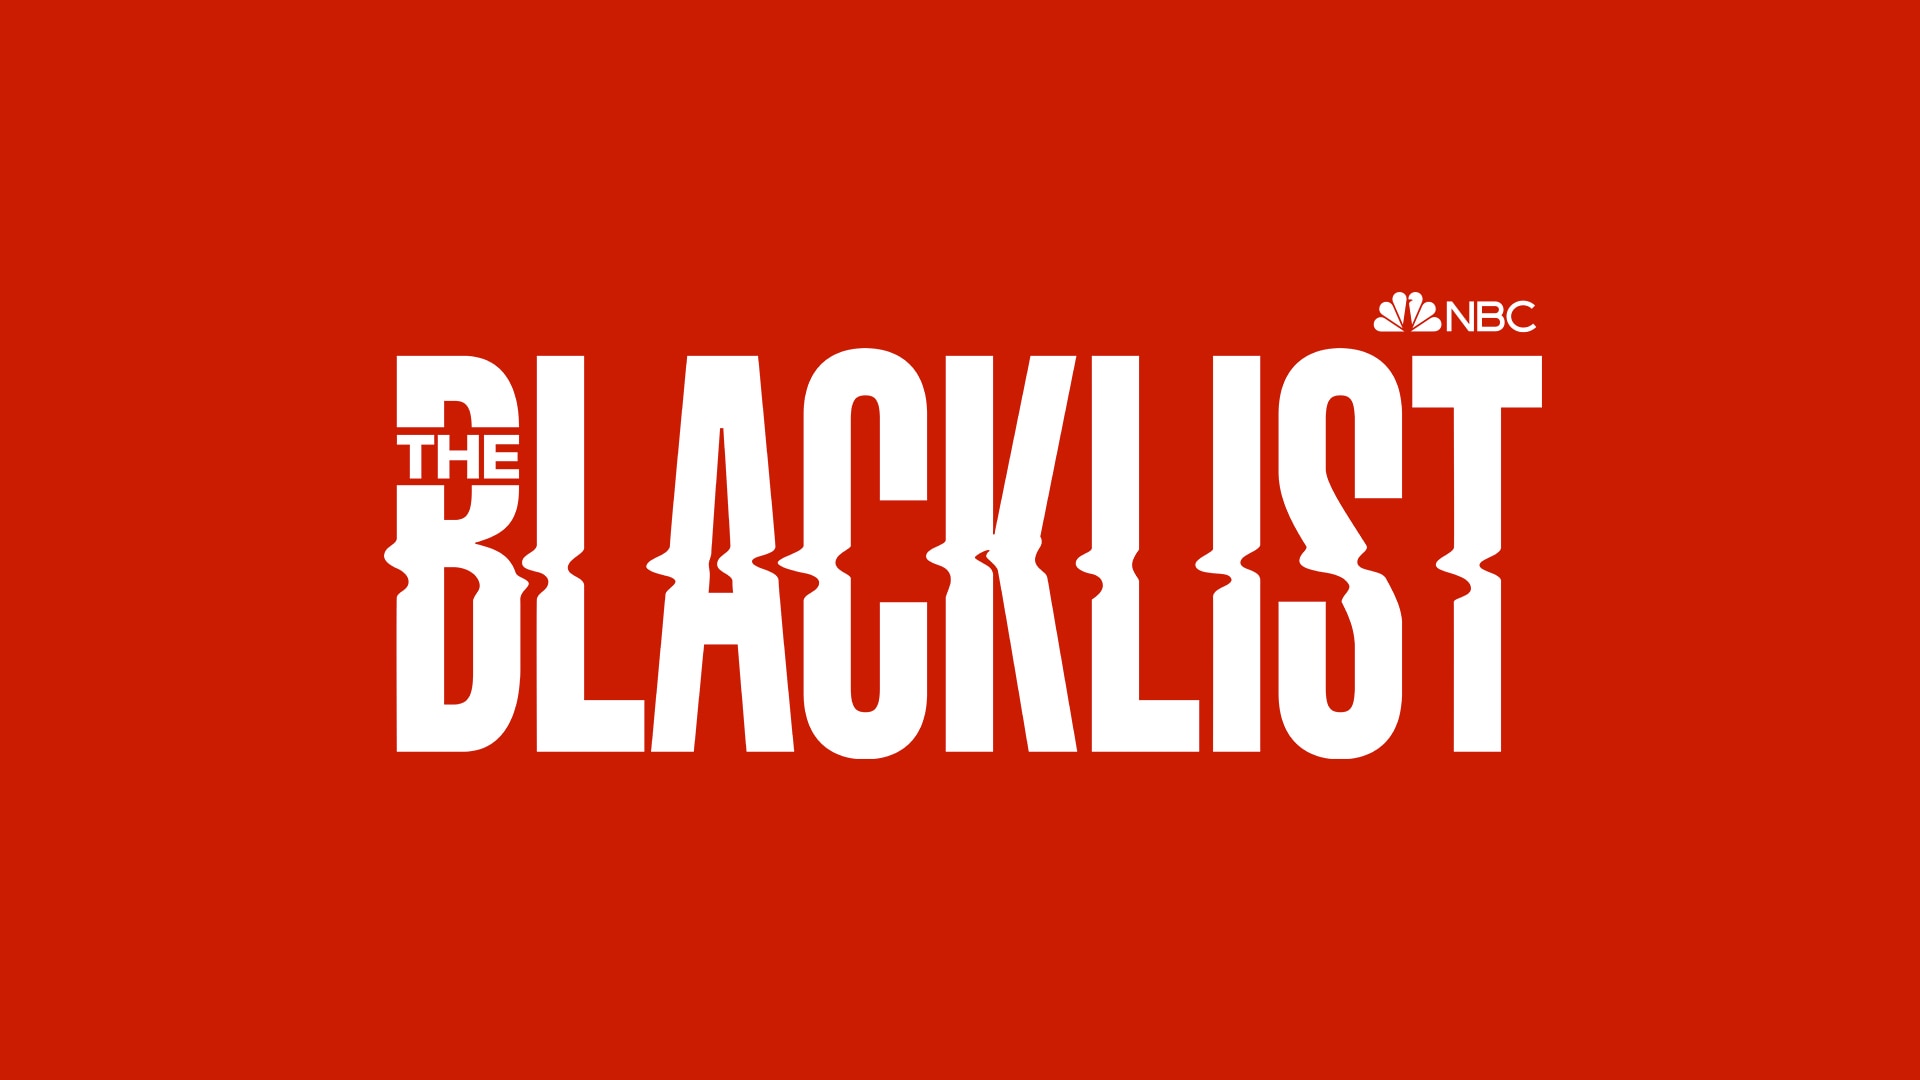 The Blacklist - NBC.com